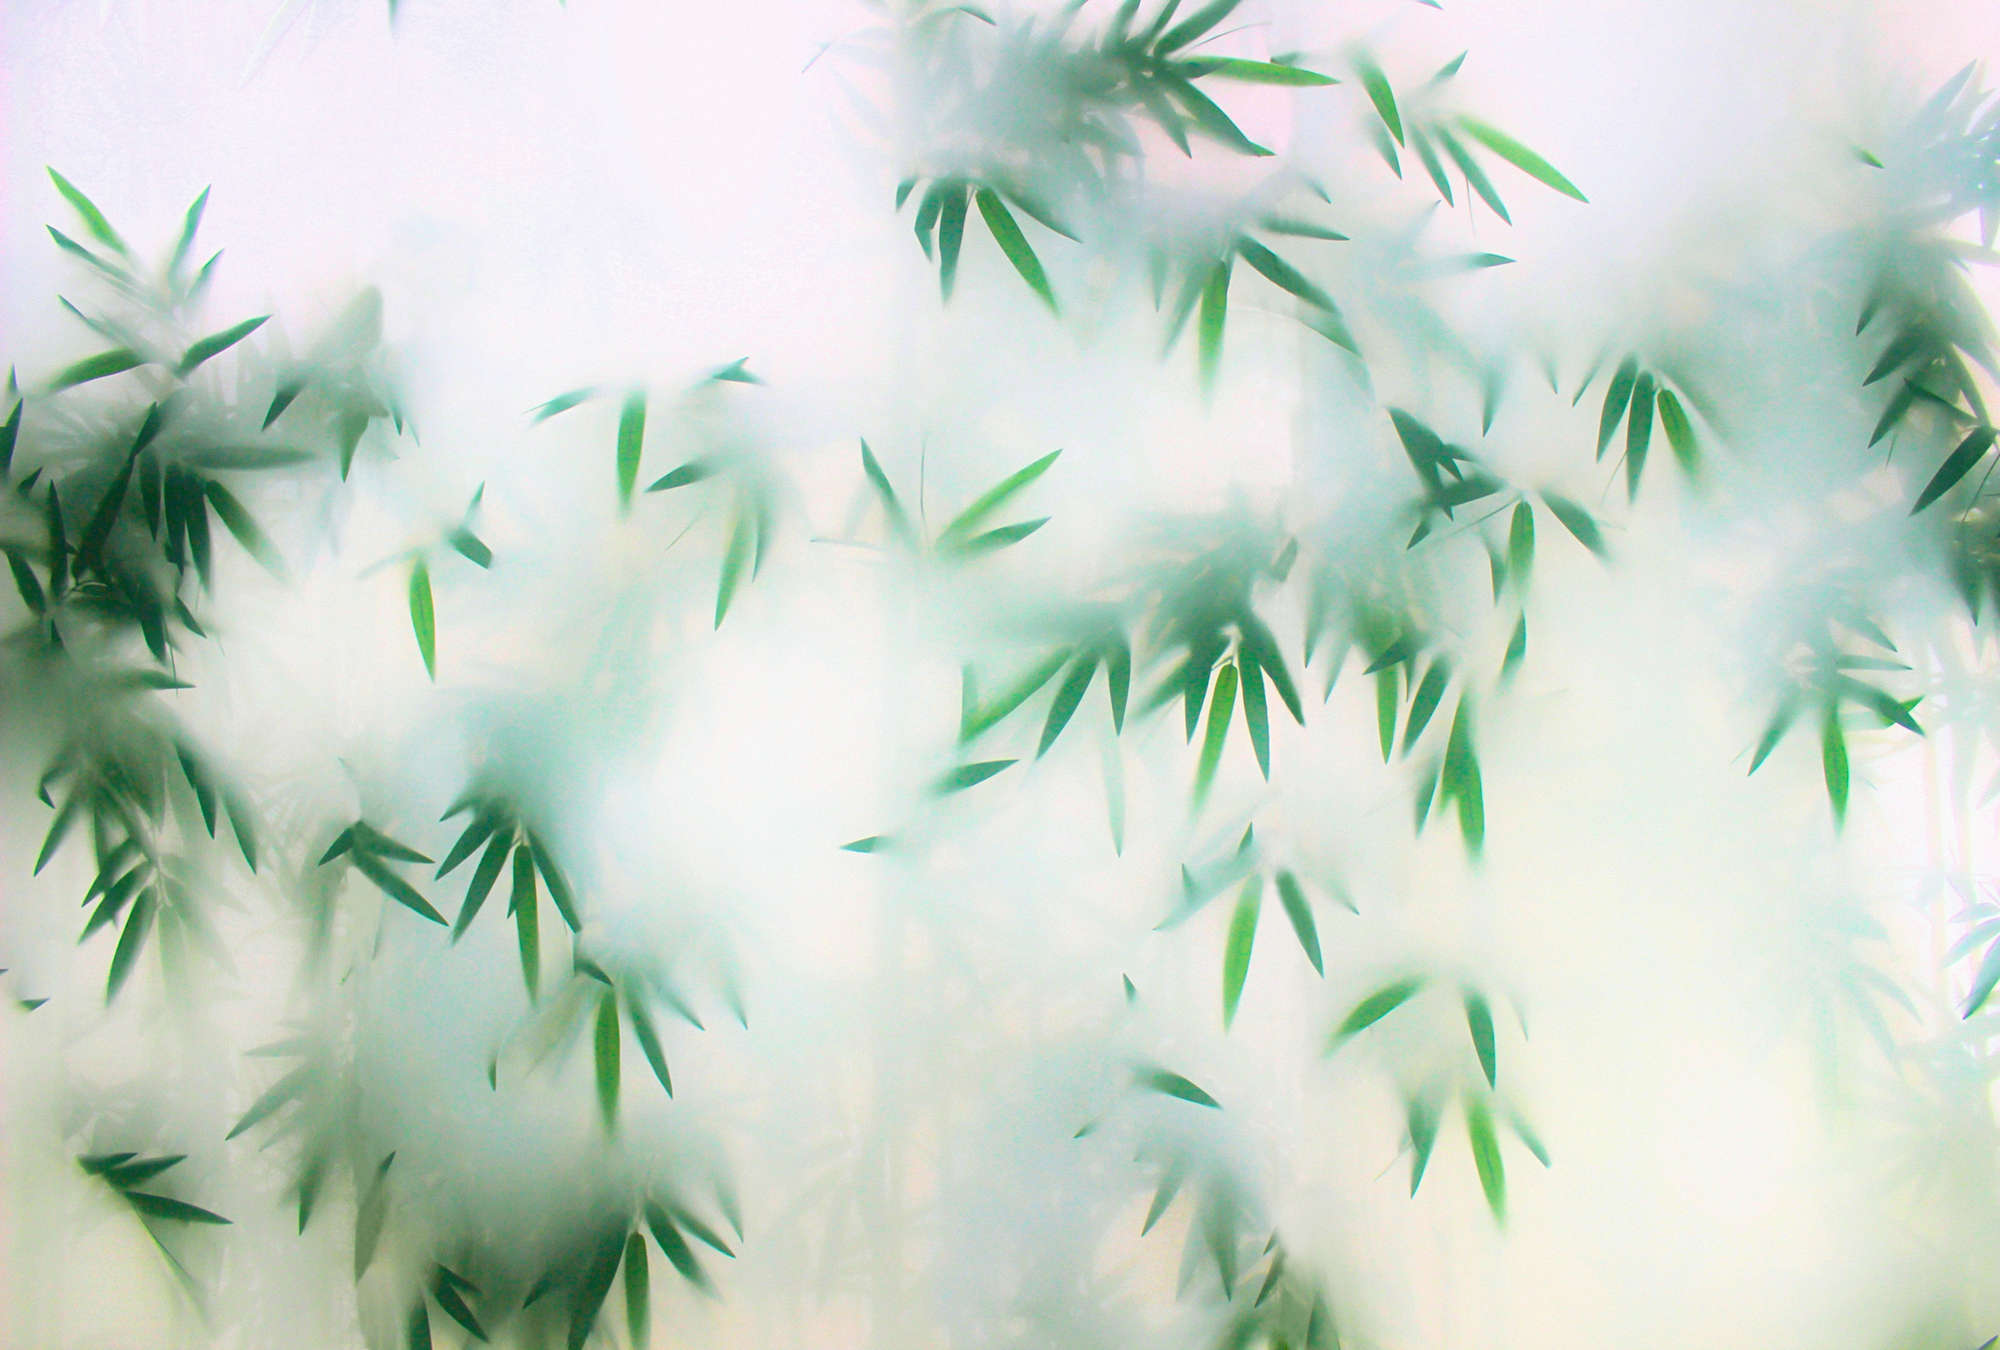             Panda Paradise 3 - bladeren fotobehang bamboe in de mist
        